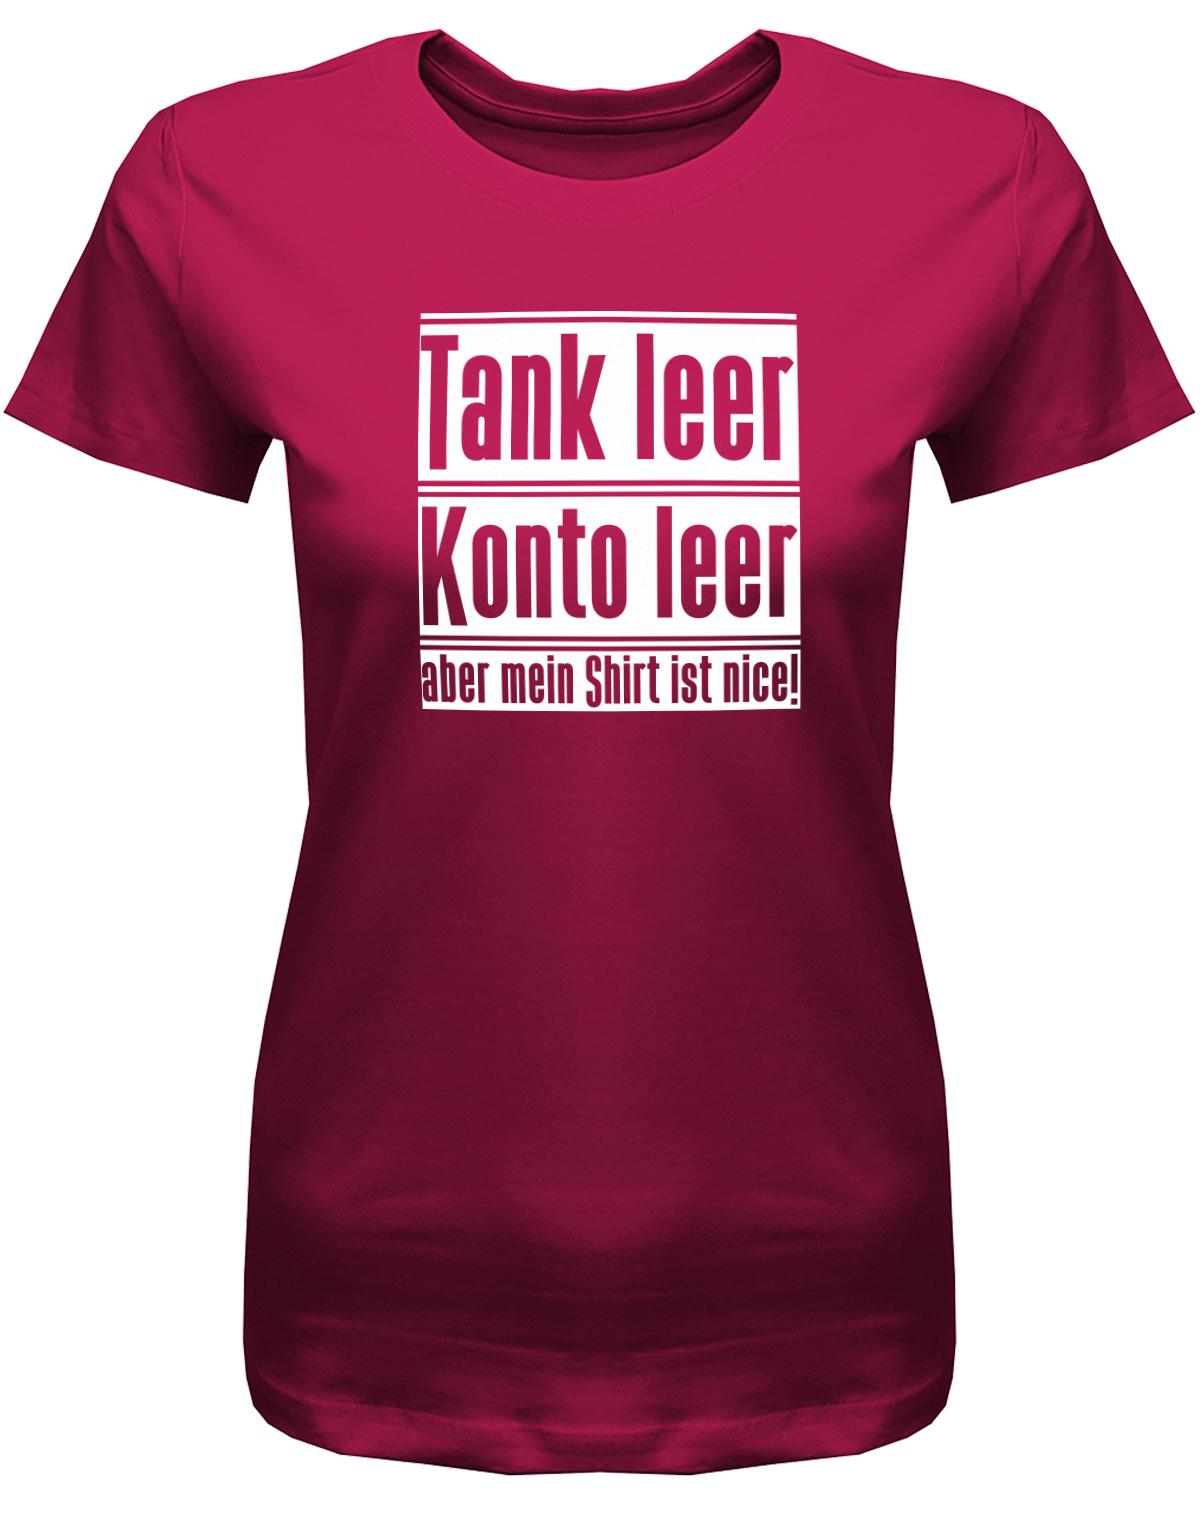 tank-leer-konto-leer-shirt-geil-damen-shirt-sorbet